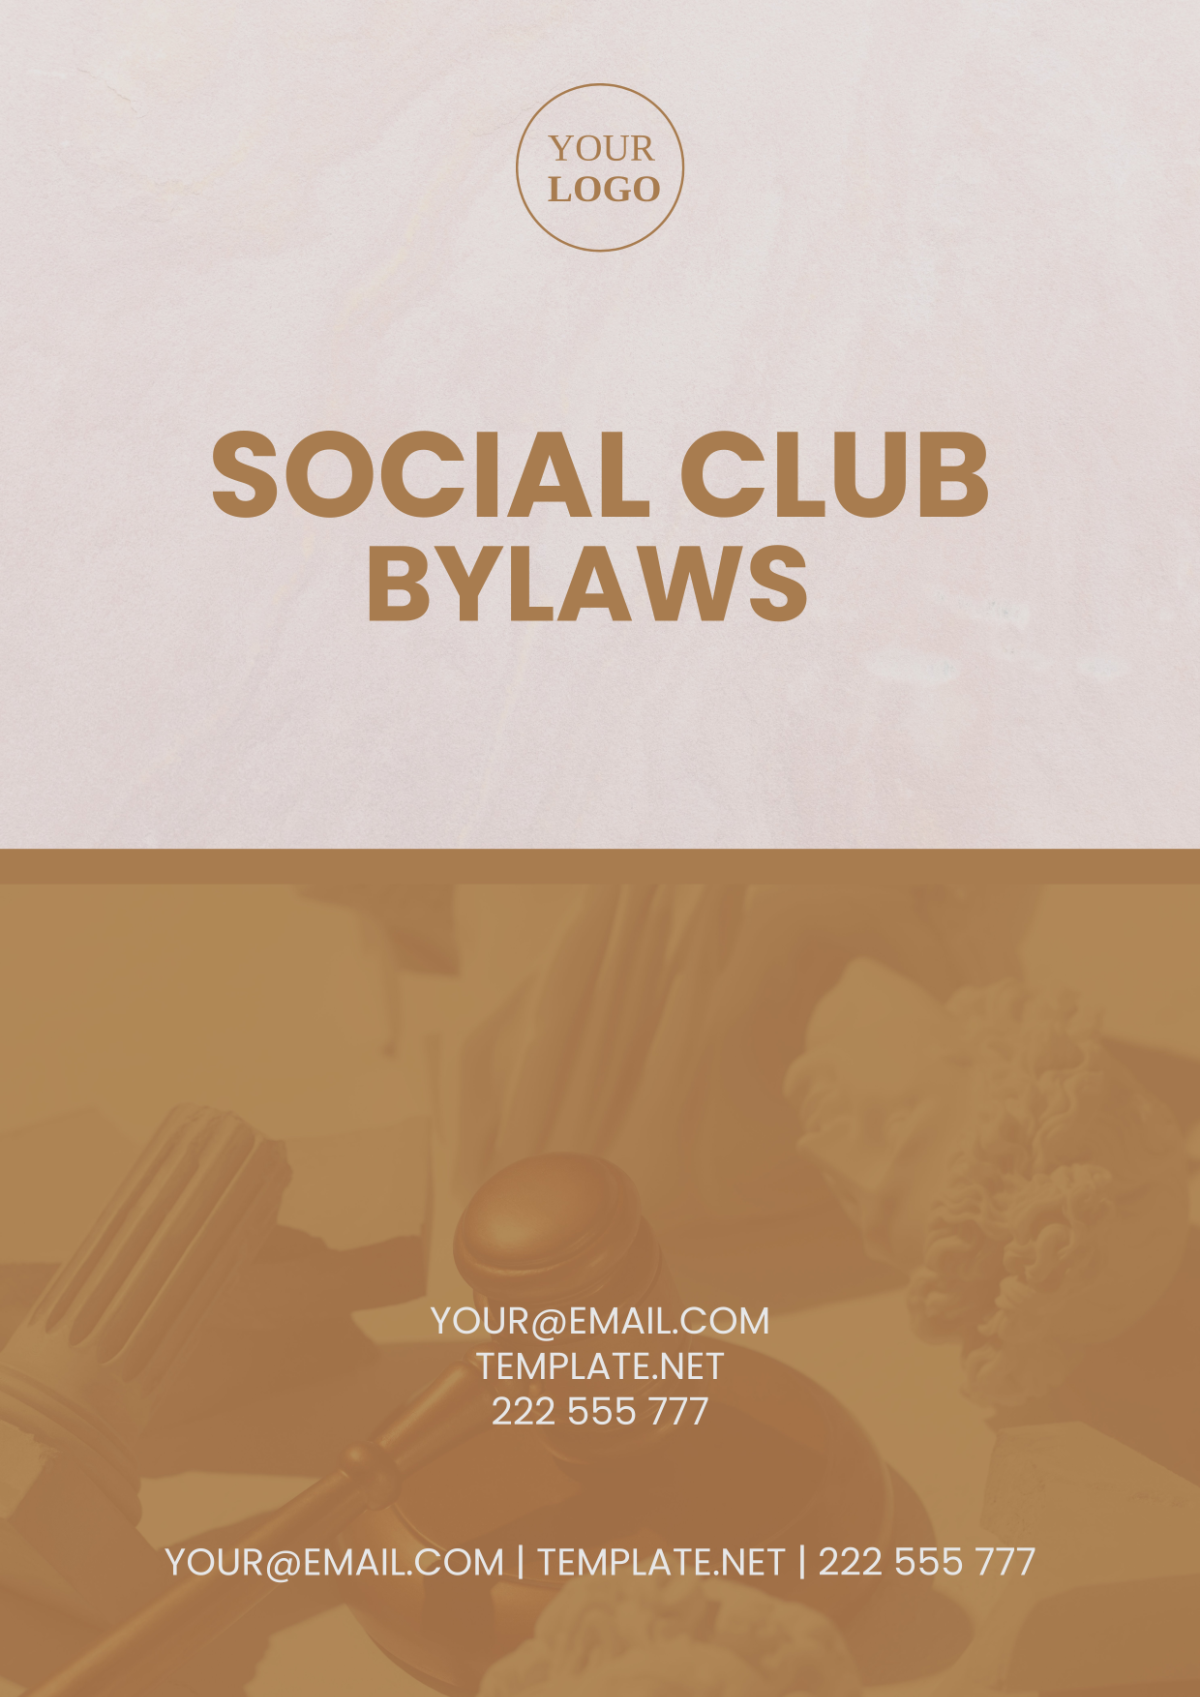 Social Club Bylaws Template